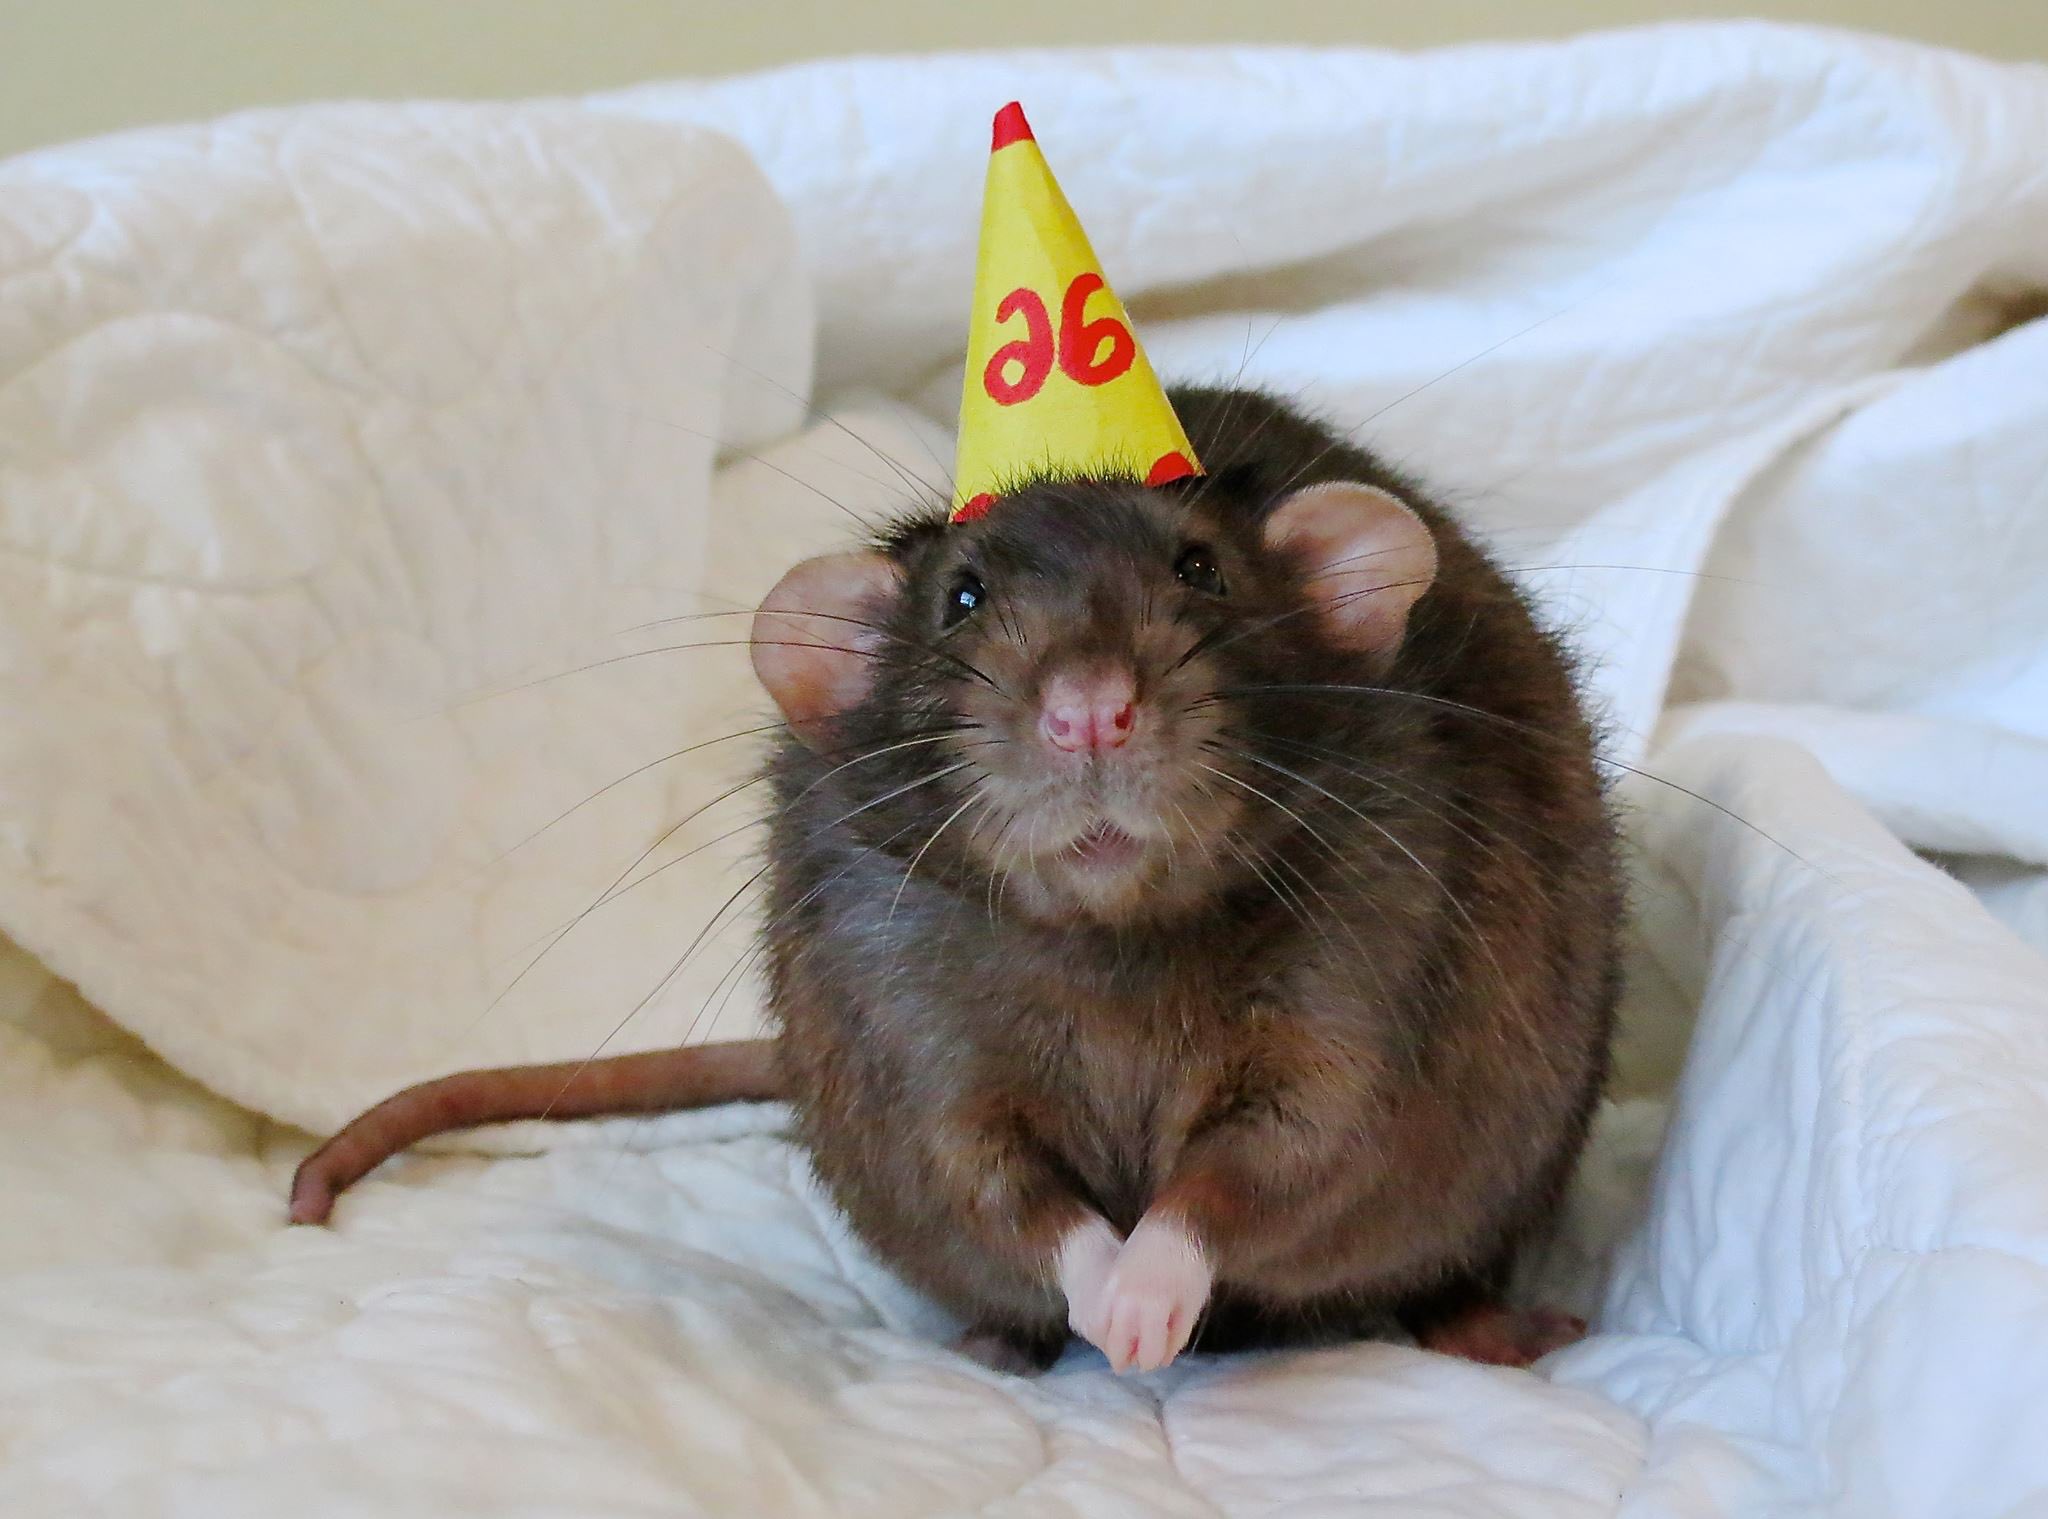 Rats rat is celebrating his 26th birthday